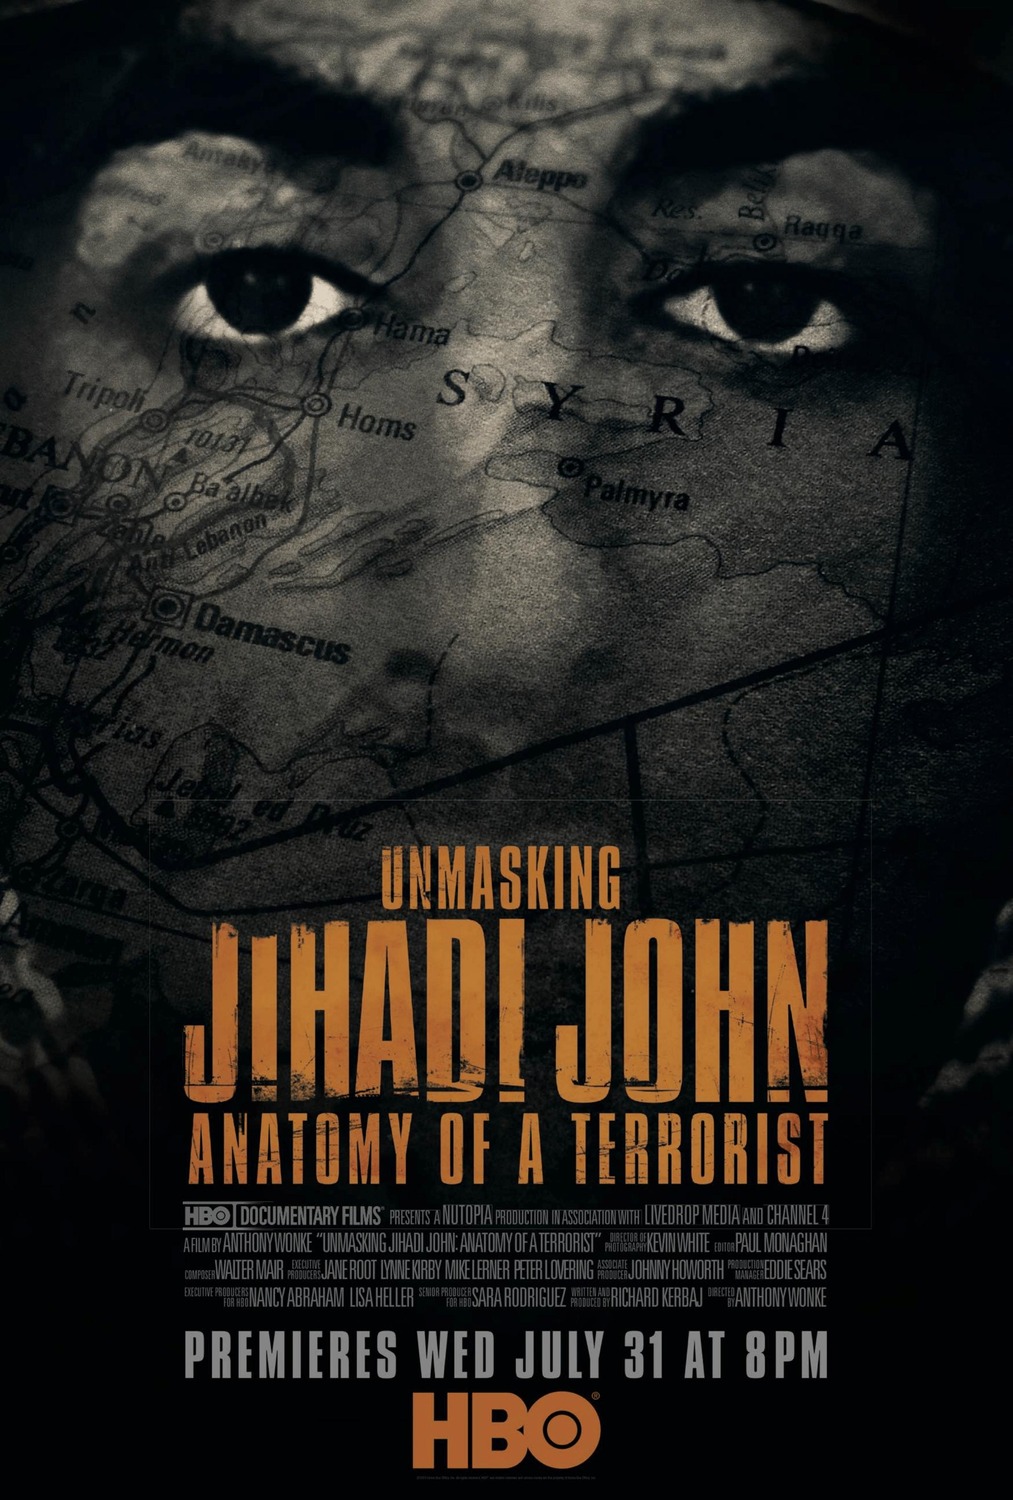 Extra Large TV Poster Image for Unmasking Jihadi John: Anatomy of a Terrorist 